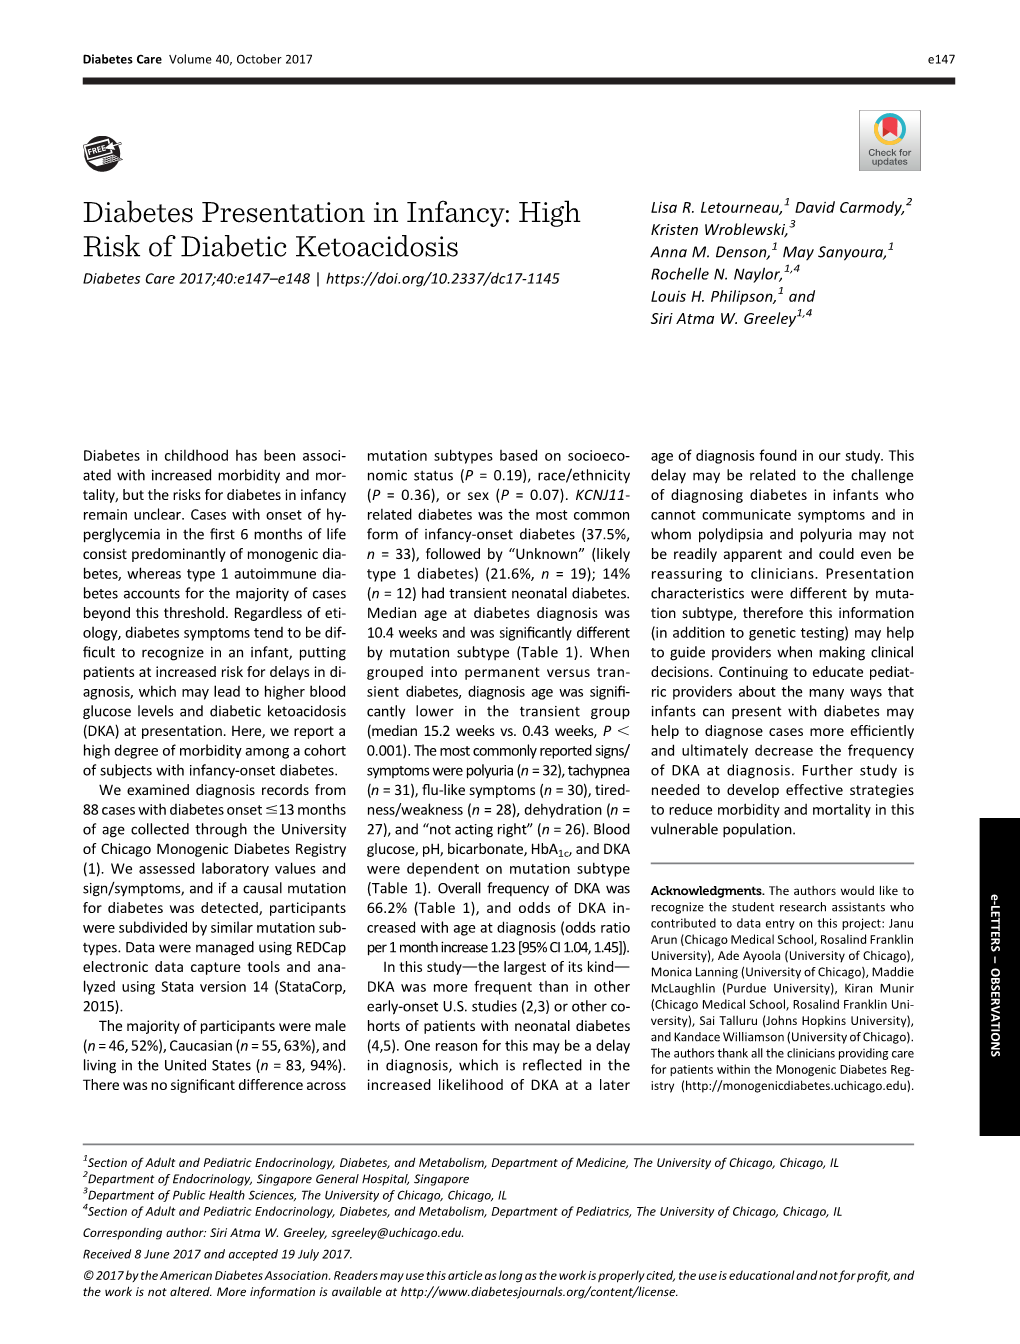 Diabetes Presentation in Infancy: High Risk of Diabetic Ketoacidosis